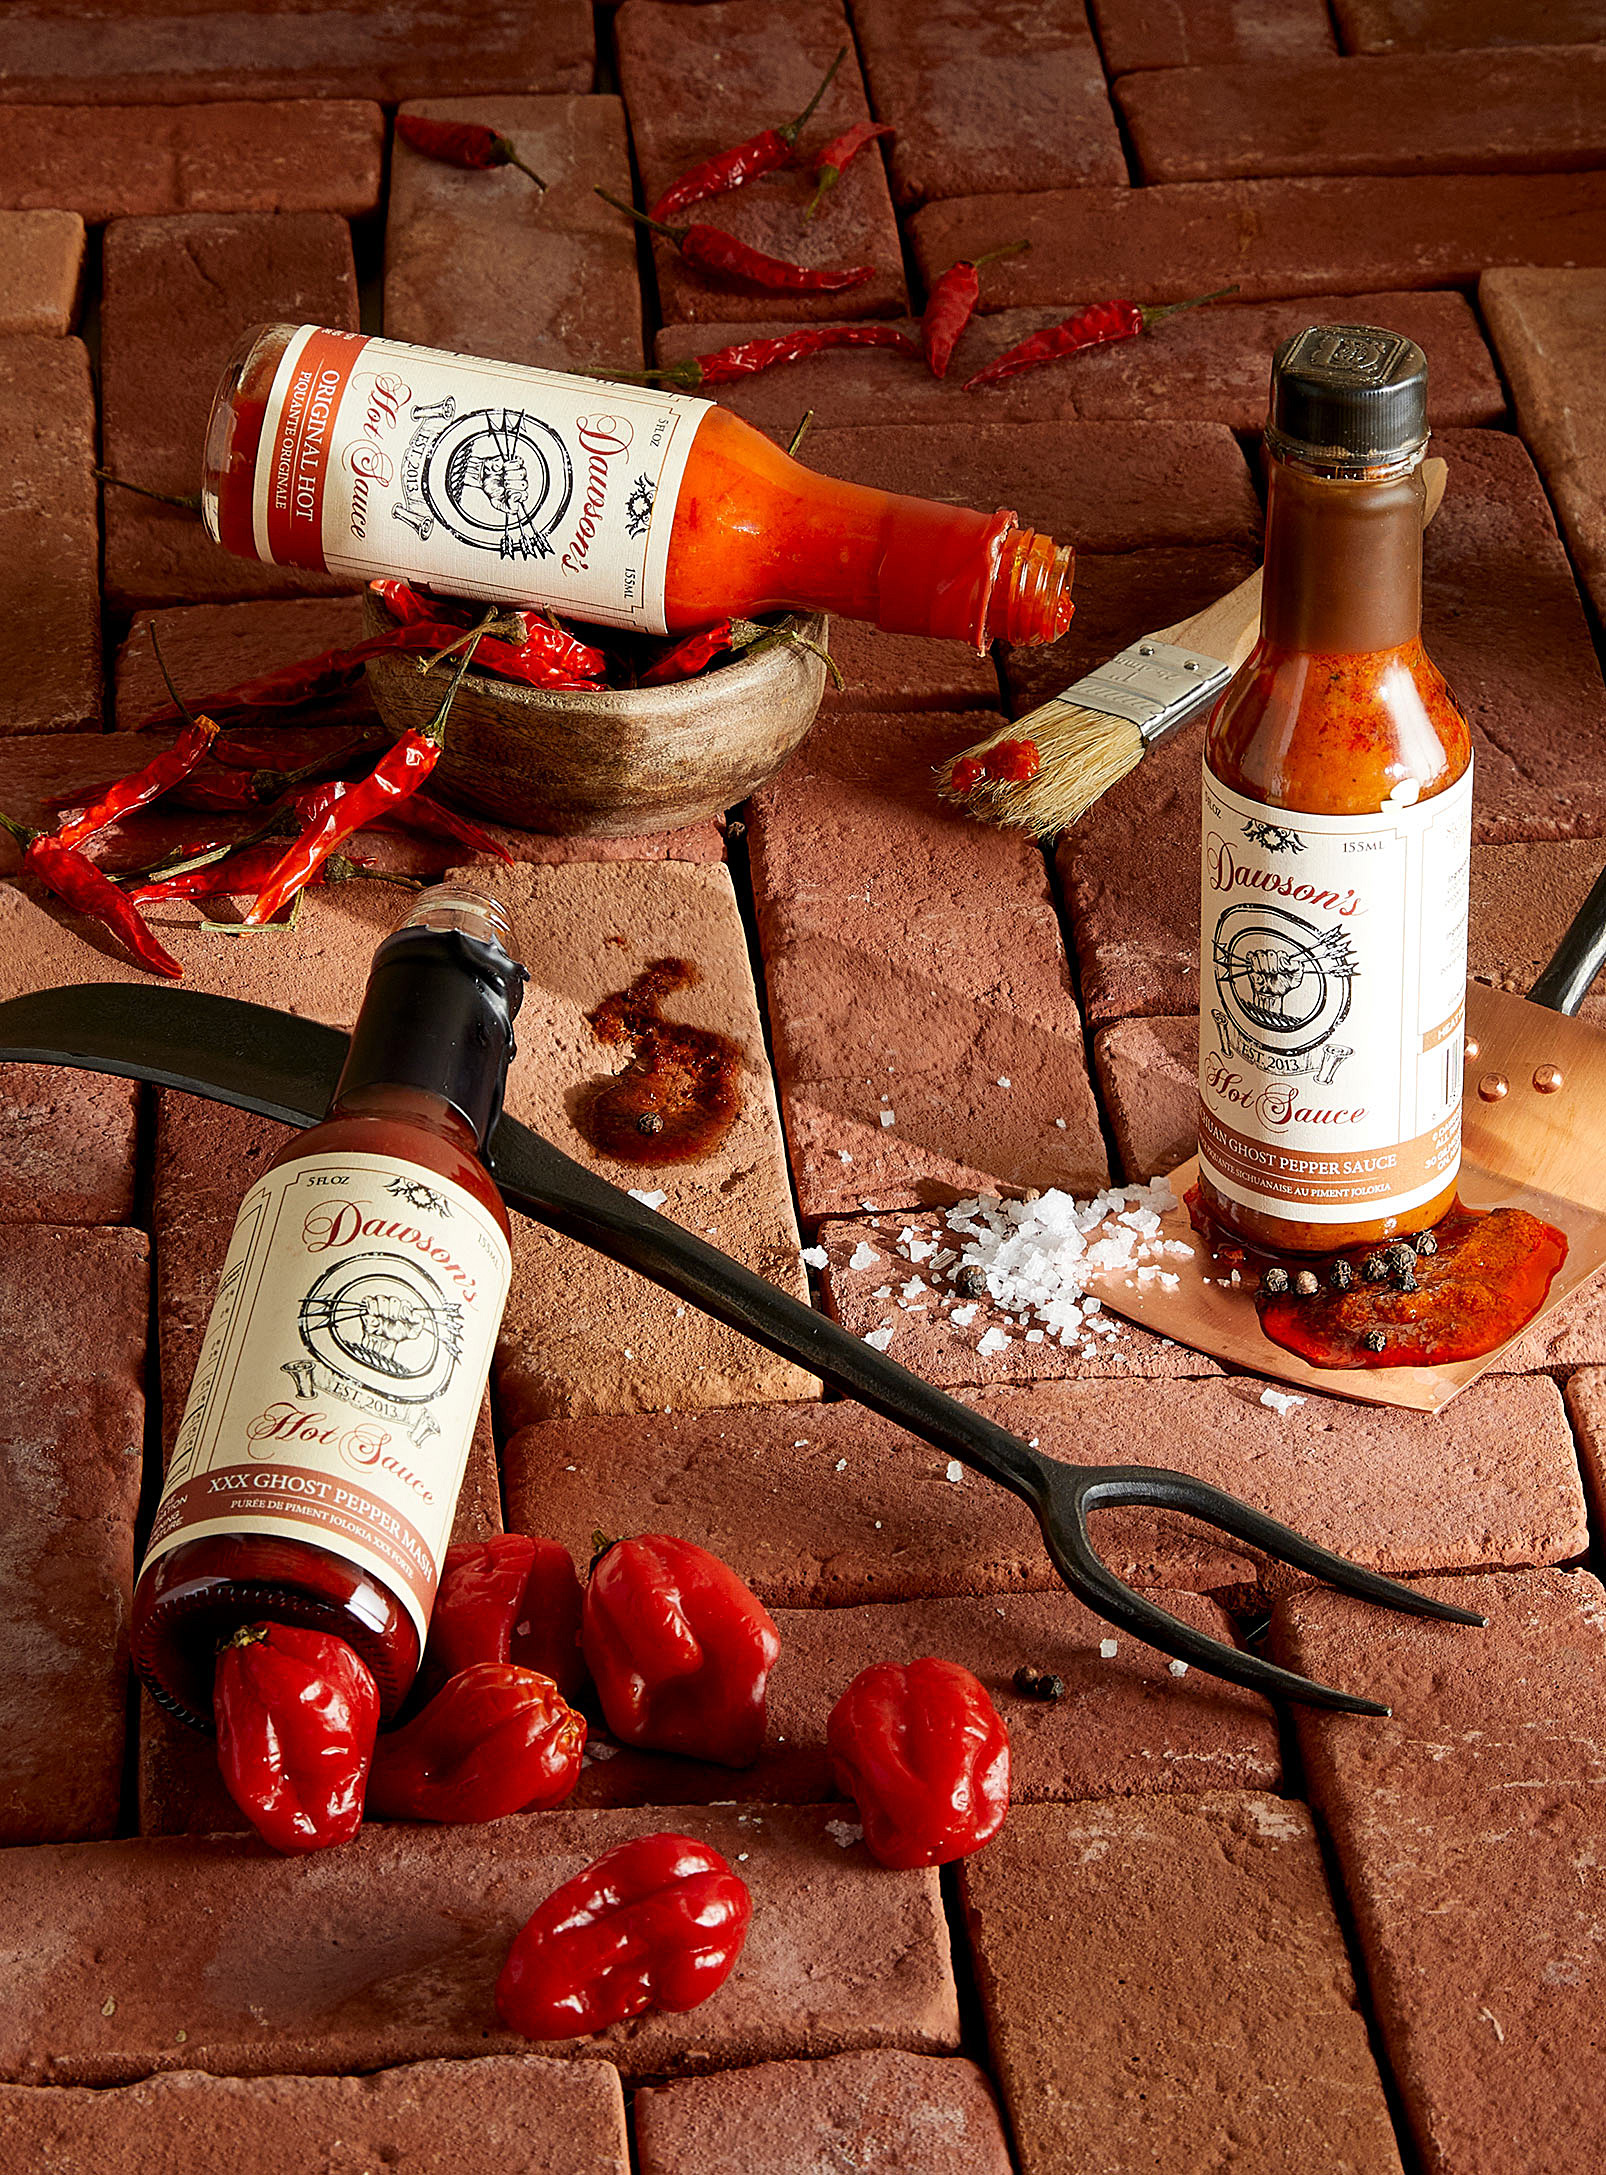 Dawson's Hot Sauce - Very hot spicy sauce set 3 sauces